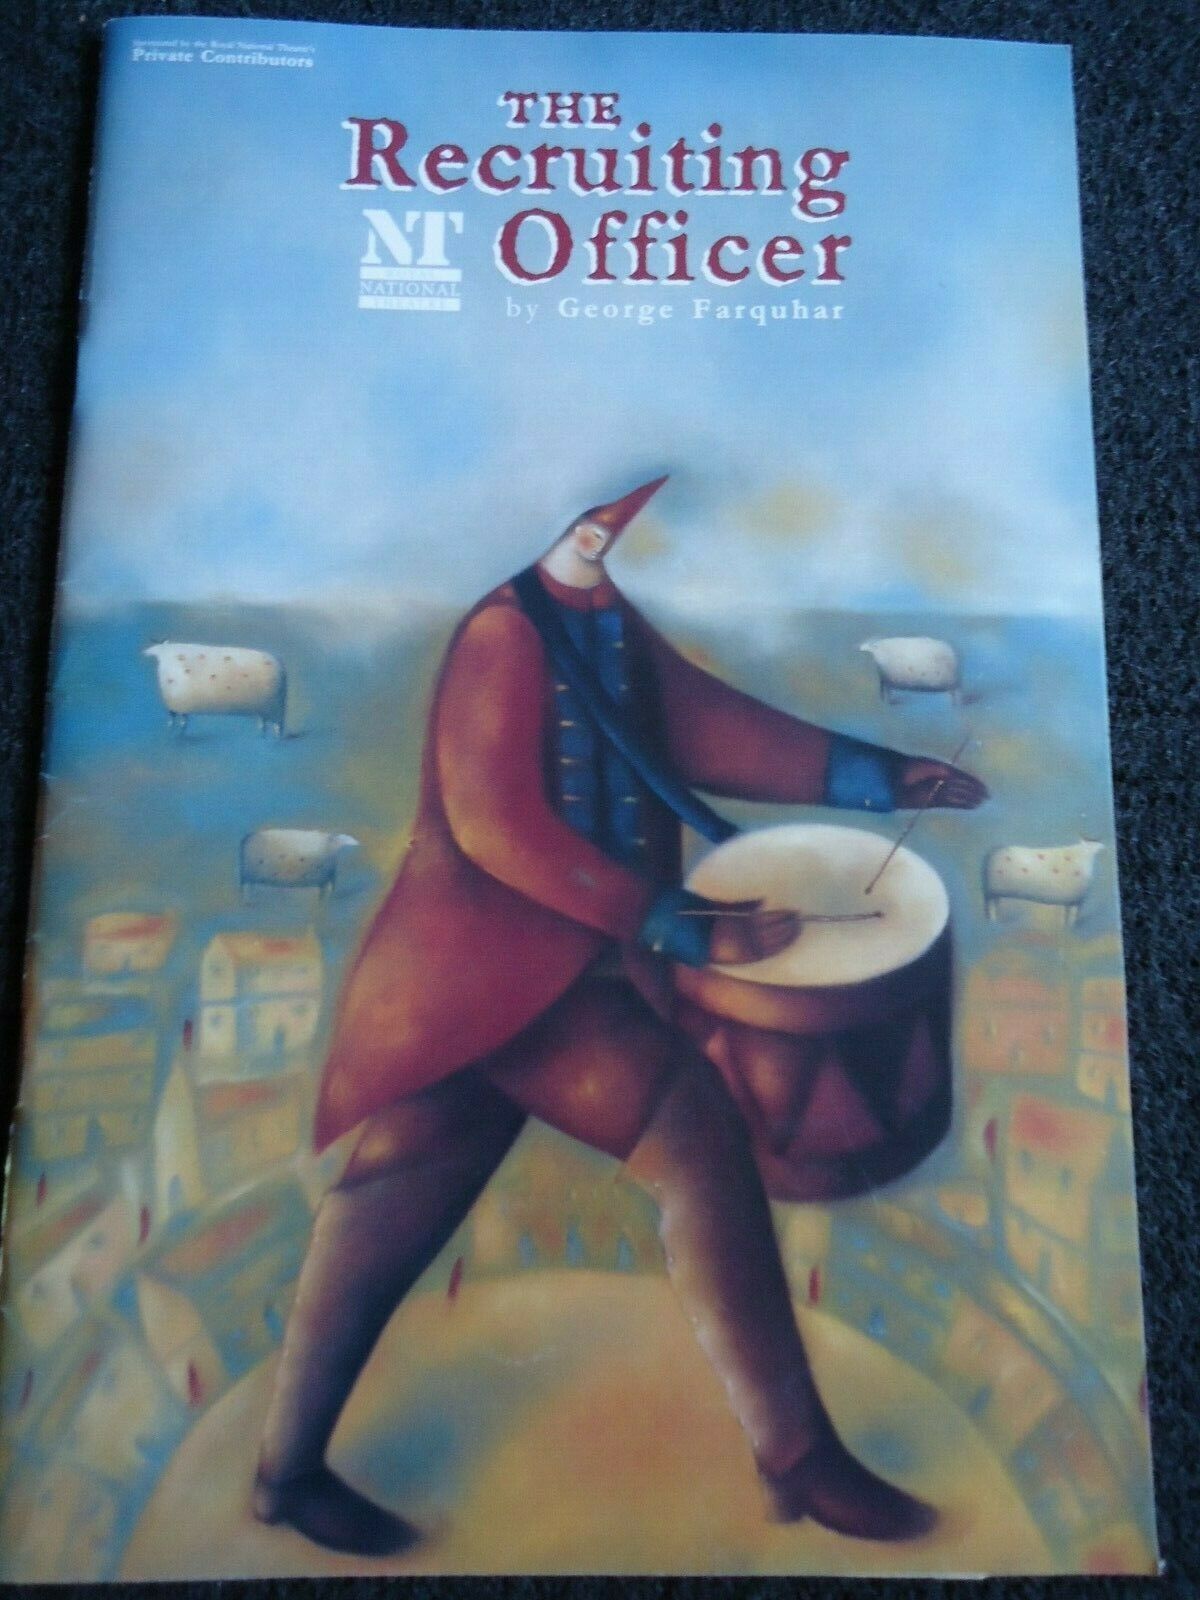 1992 - The National Theatre Program - The Recruiting Officer - Ken Scott